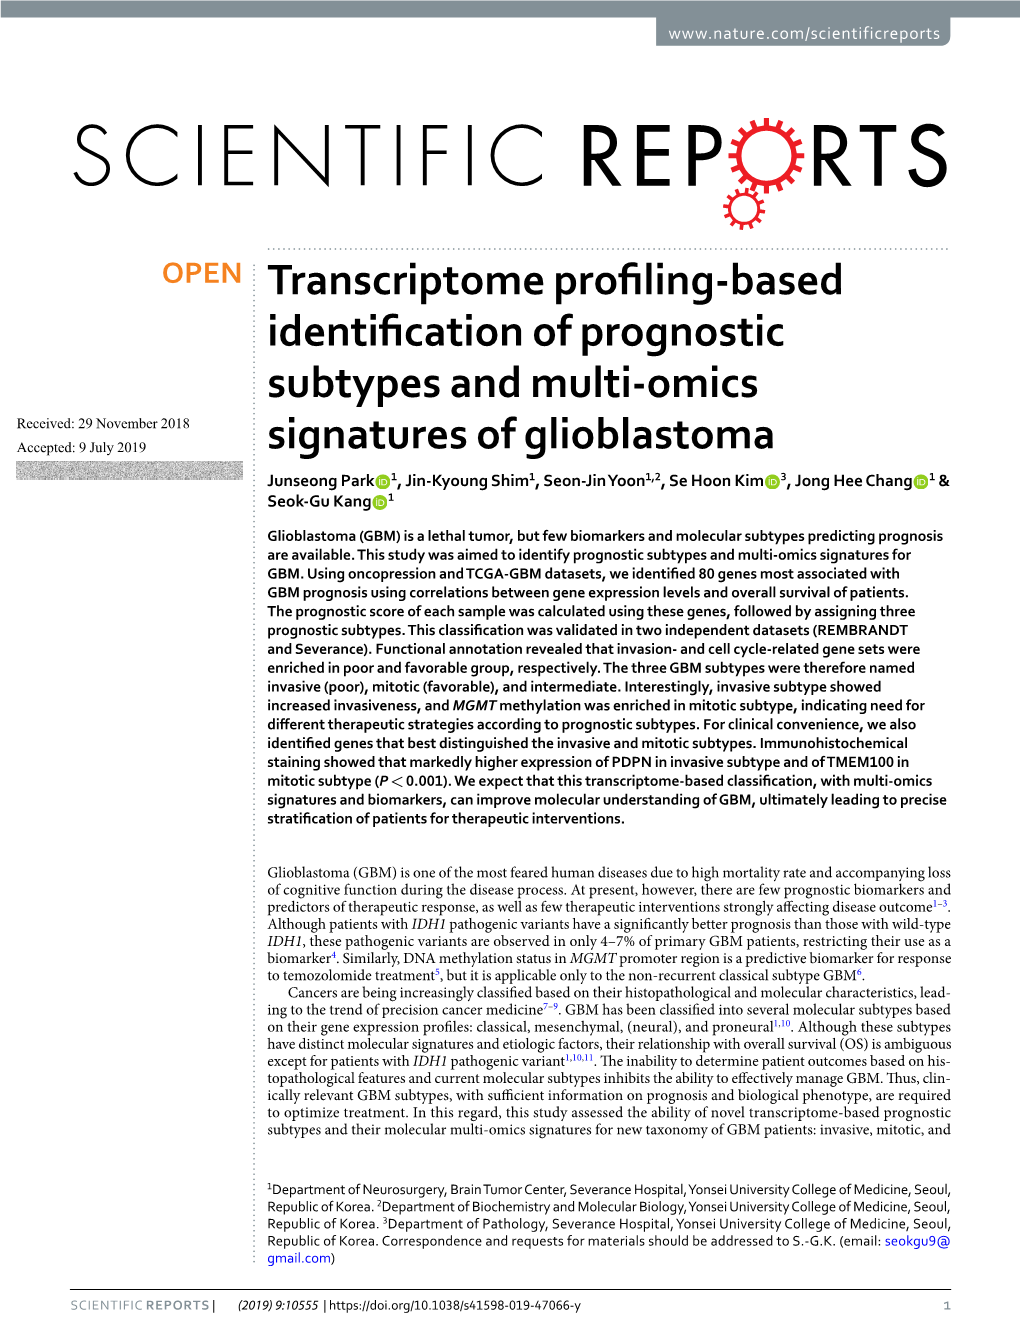 Transcriptome Profiling-Based Identification of Prognostic Subtypes